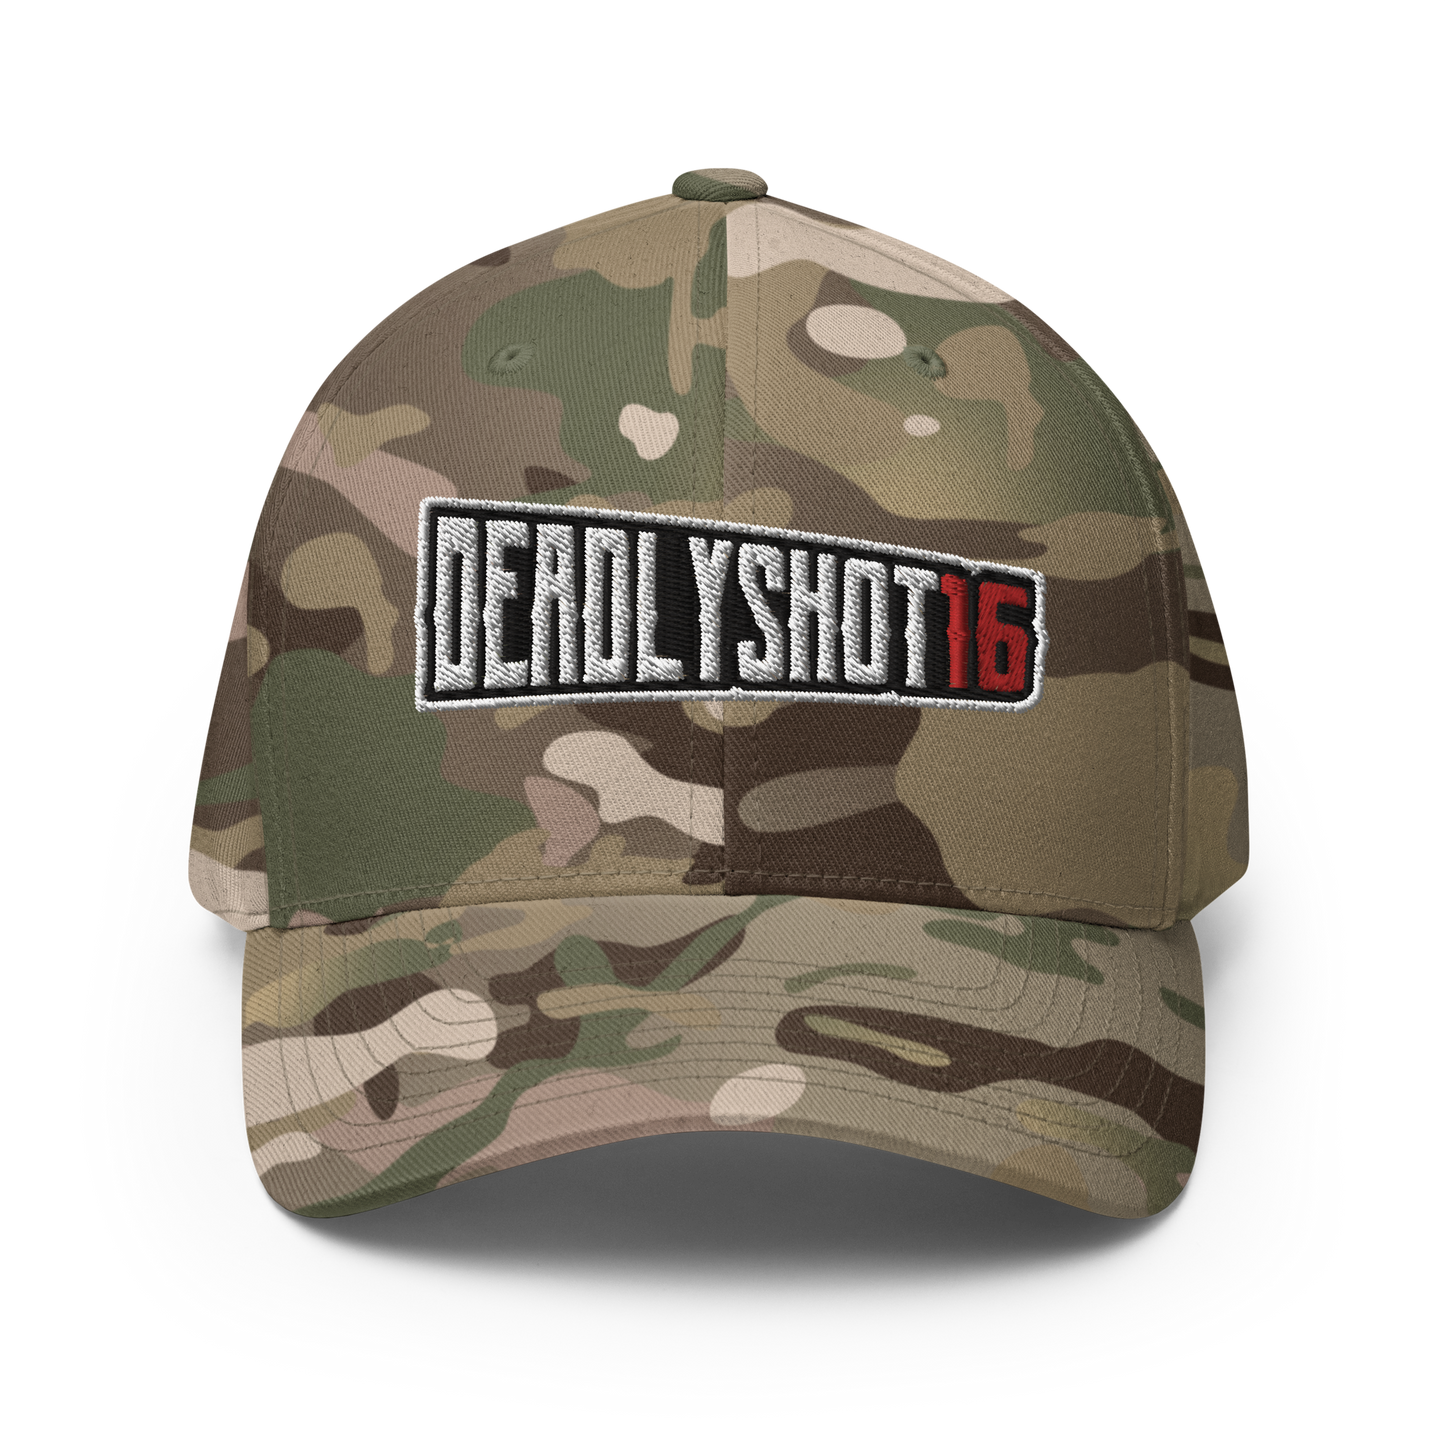 Deadlyshot16 Flex Fit Hat